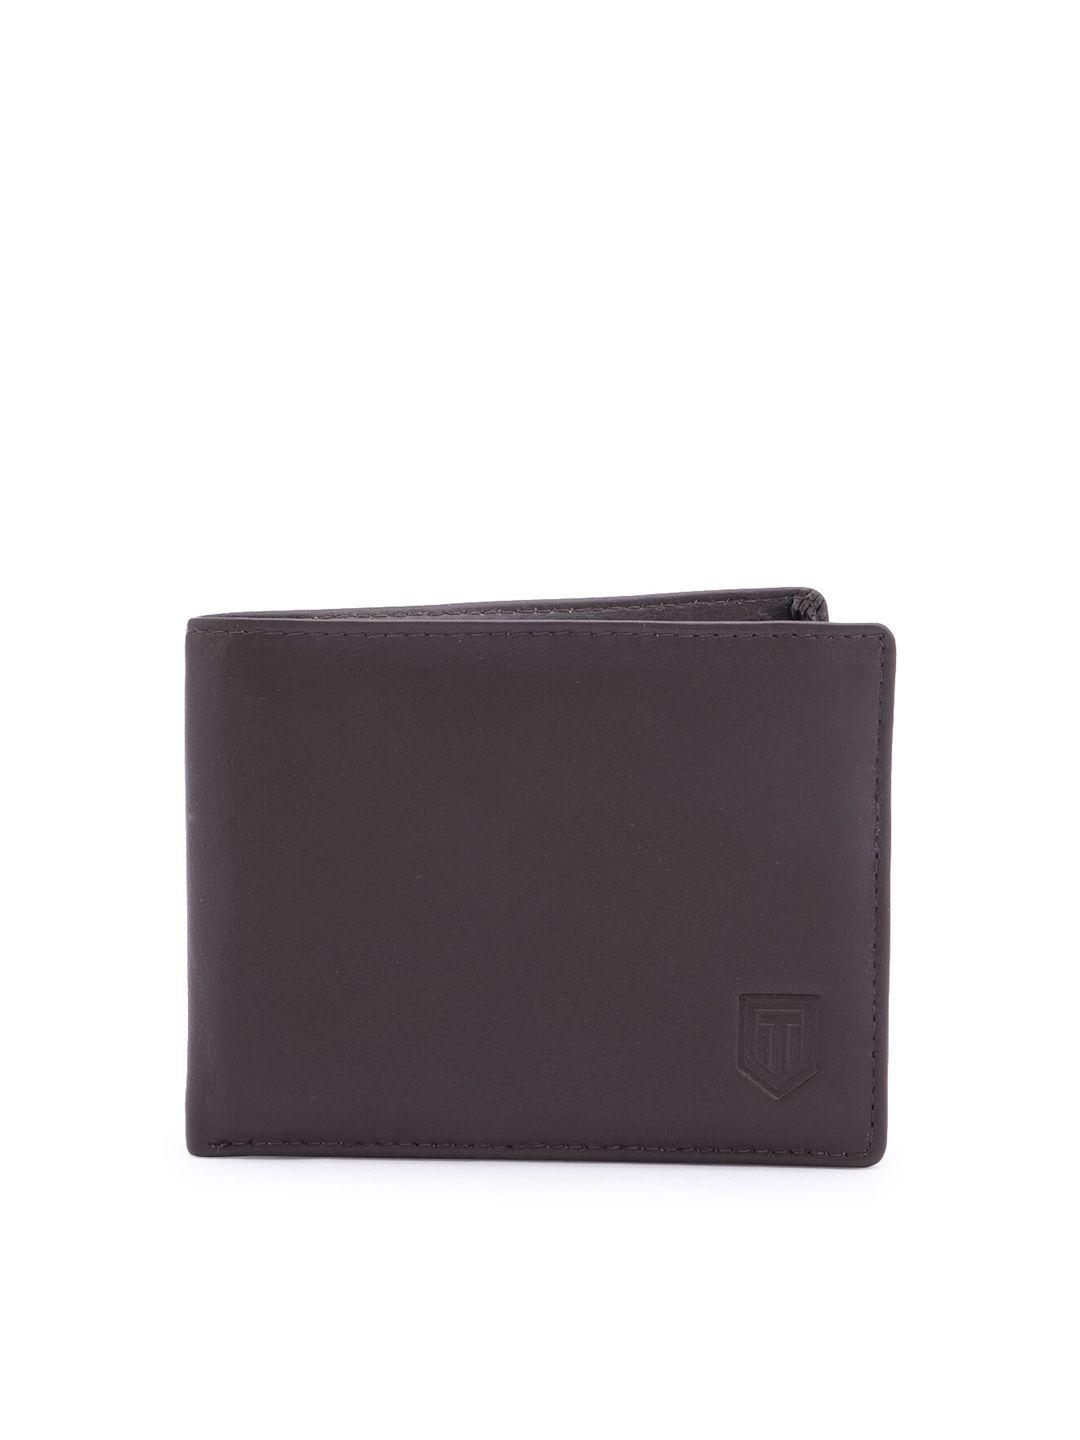 tom lang london men leather two fold wallet